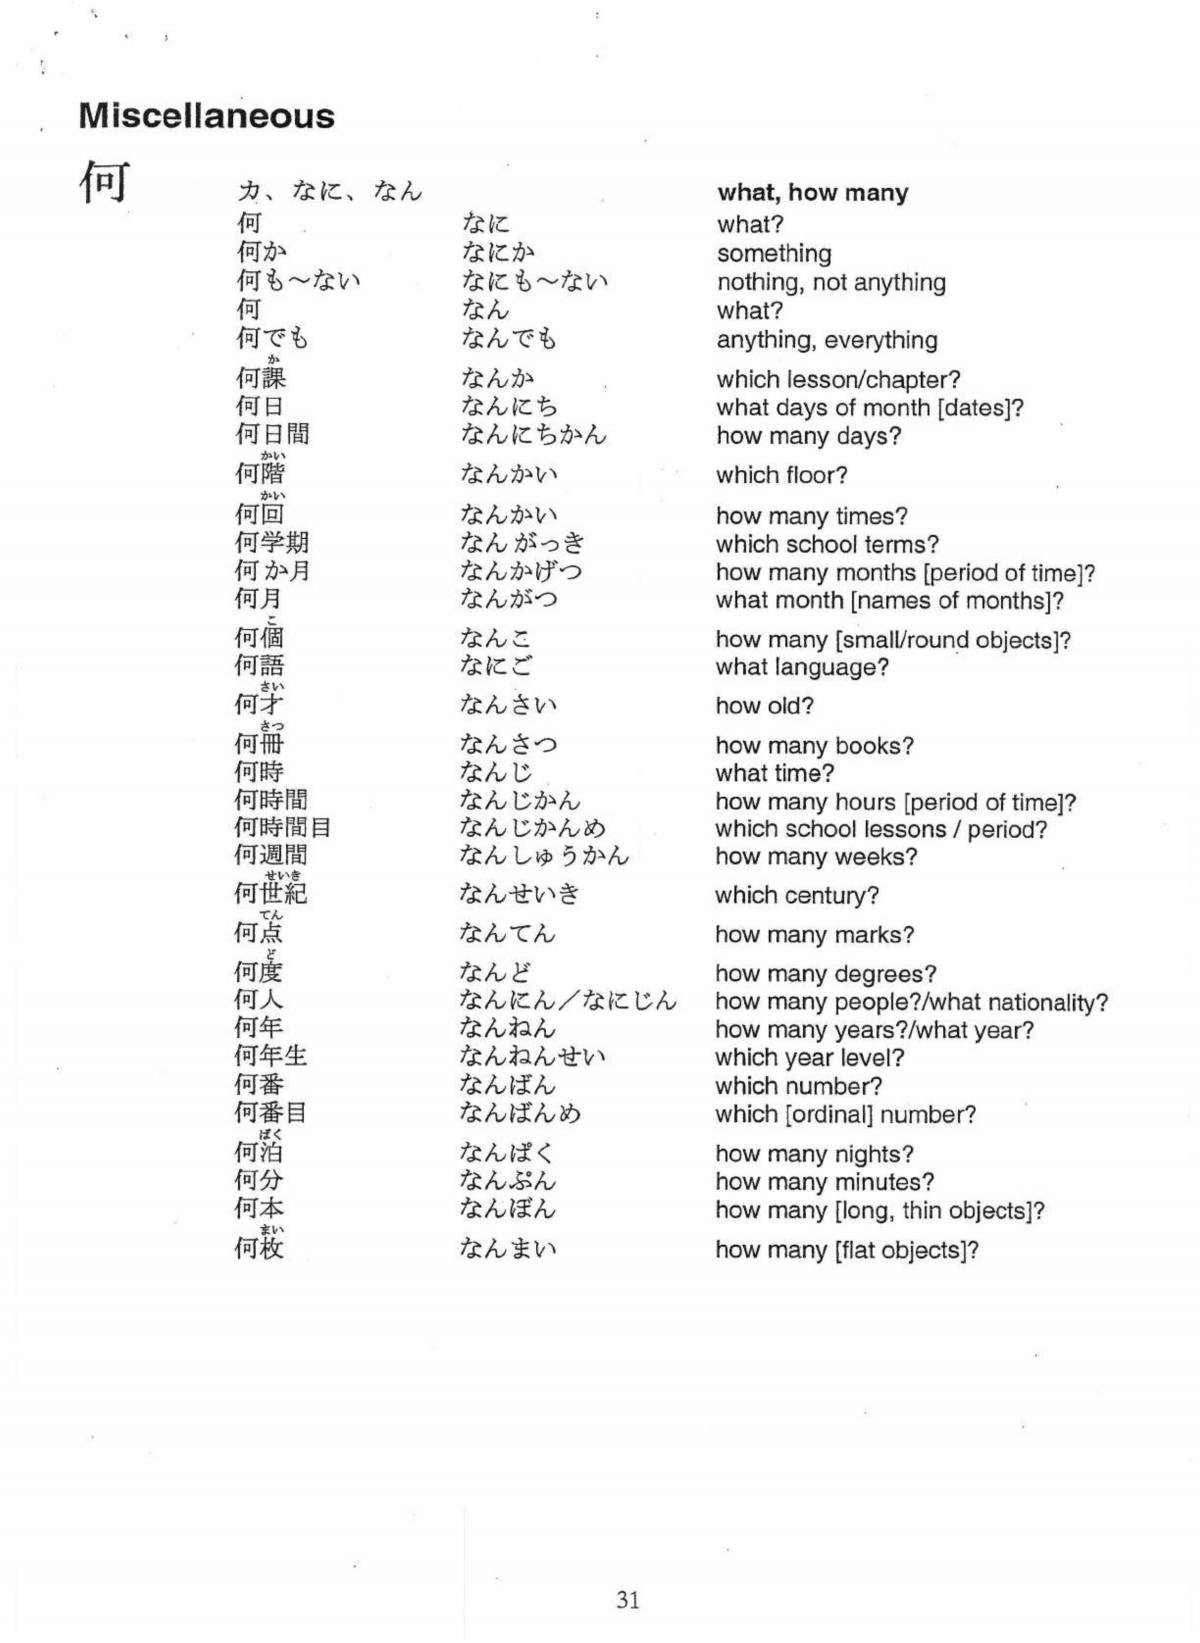 edited prescribed kanji list  - Page 31